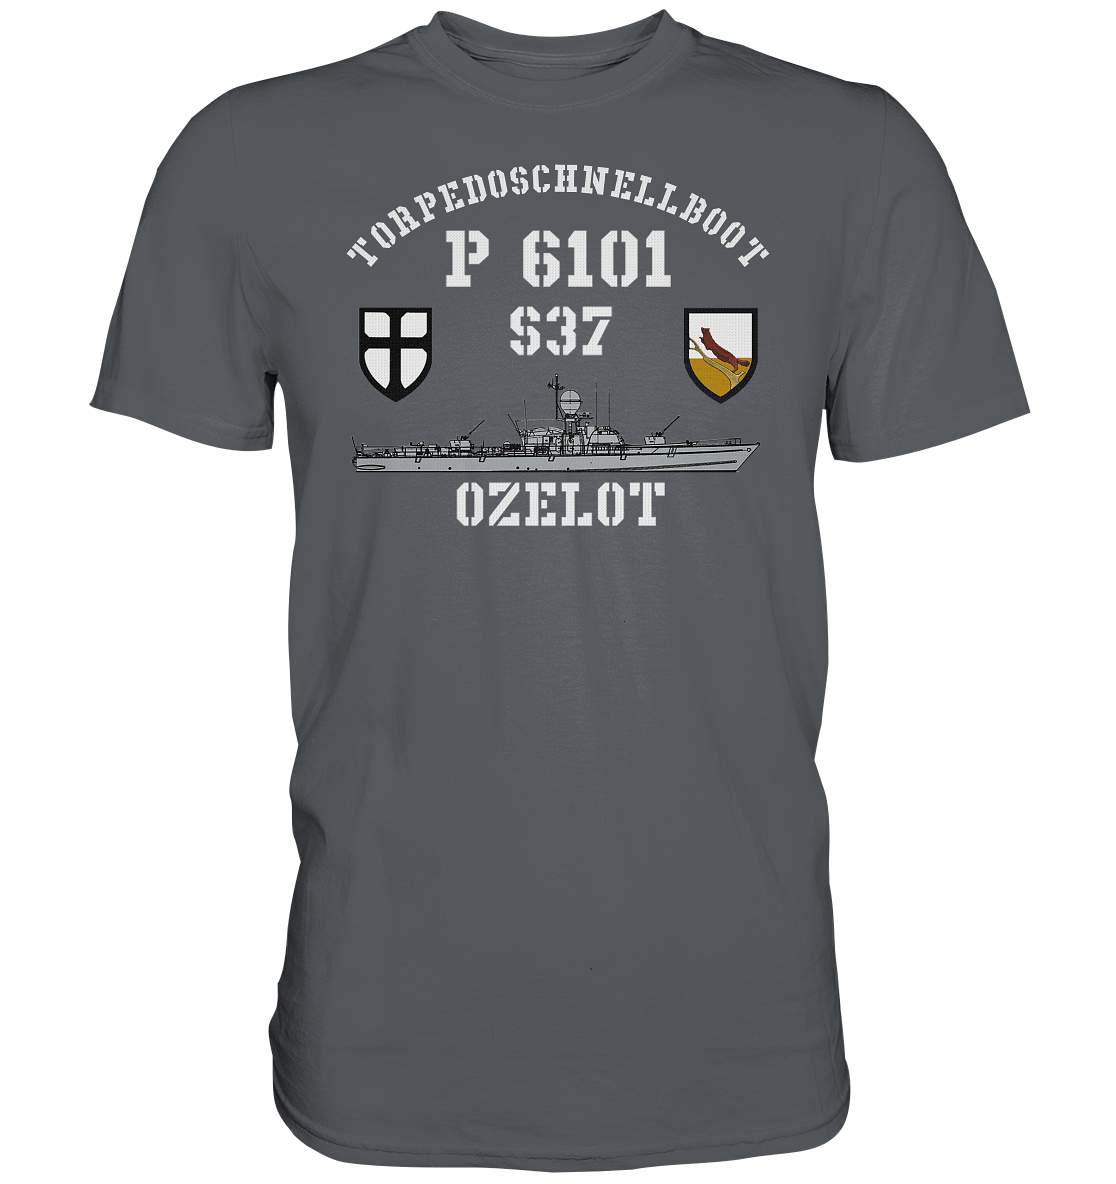 P 6101 S37 OZELOT - Premium Shirt